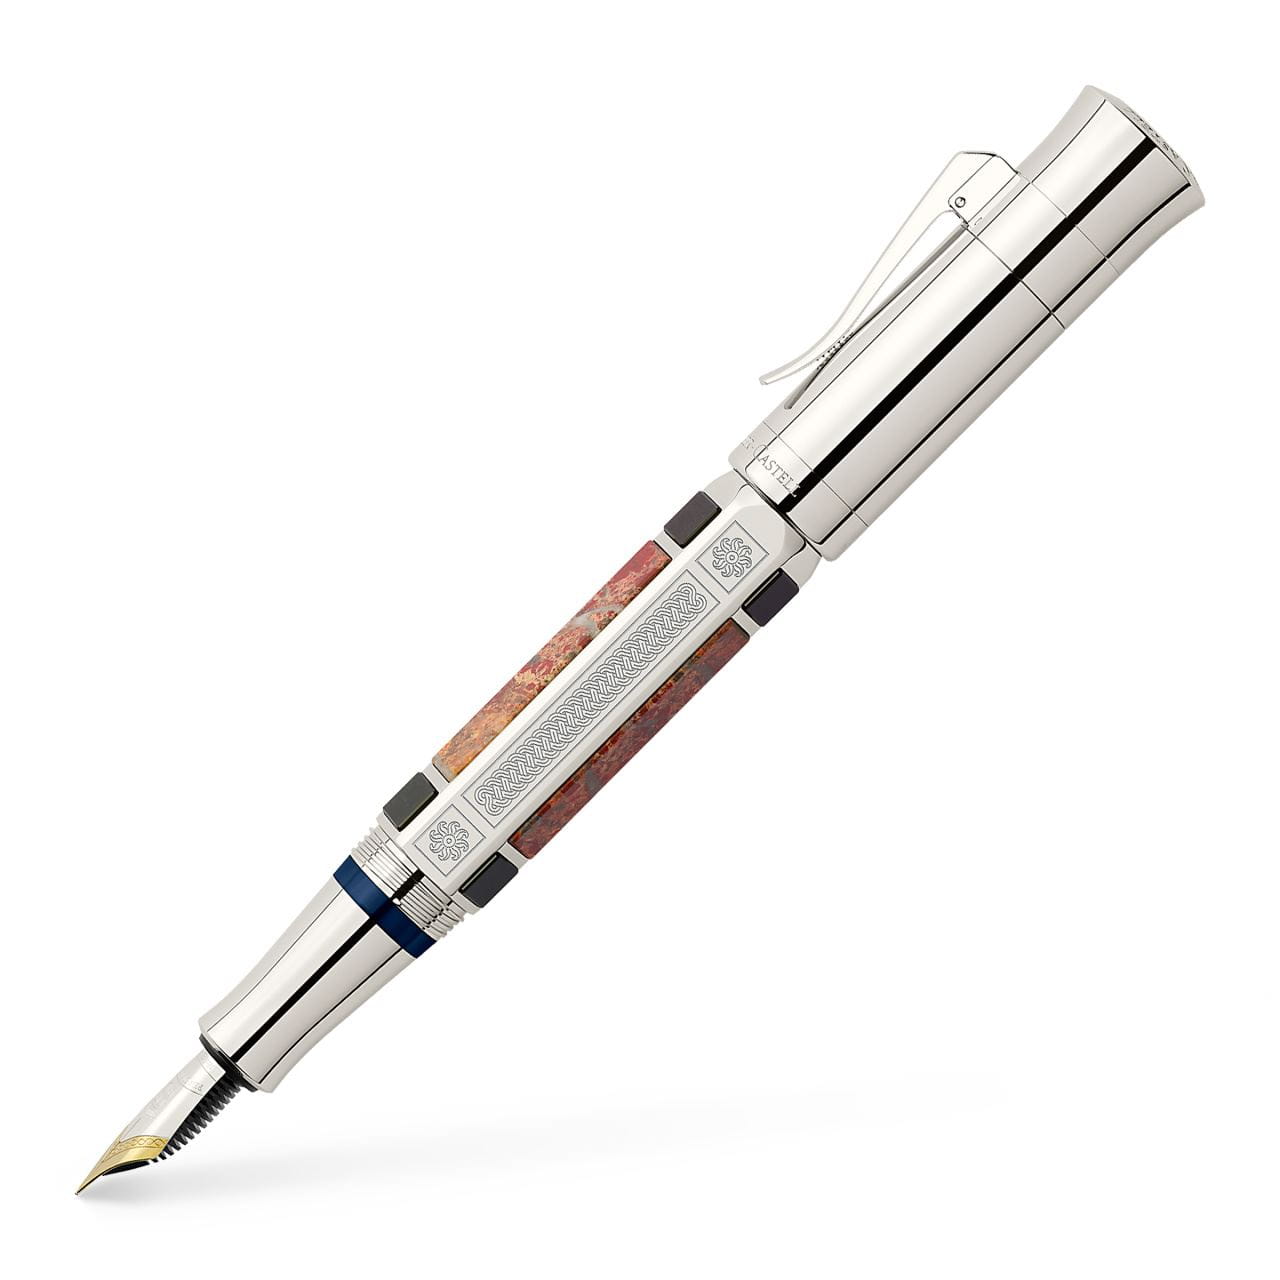 Graf-von-Faber-Castell - Fountain pen, Pen of the Year 2014 platinum-plated, Medium